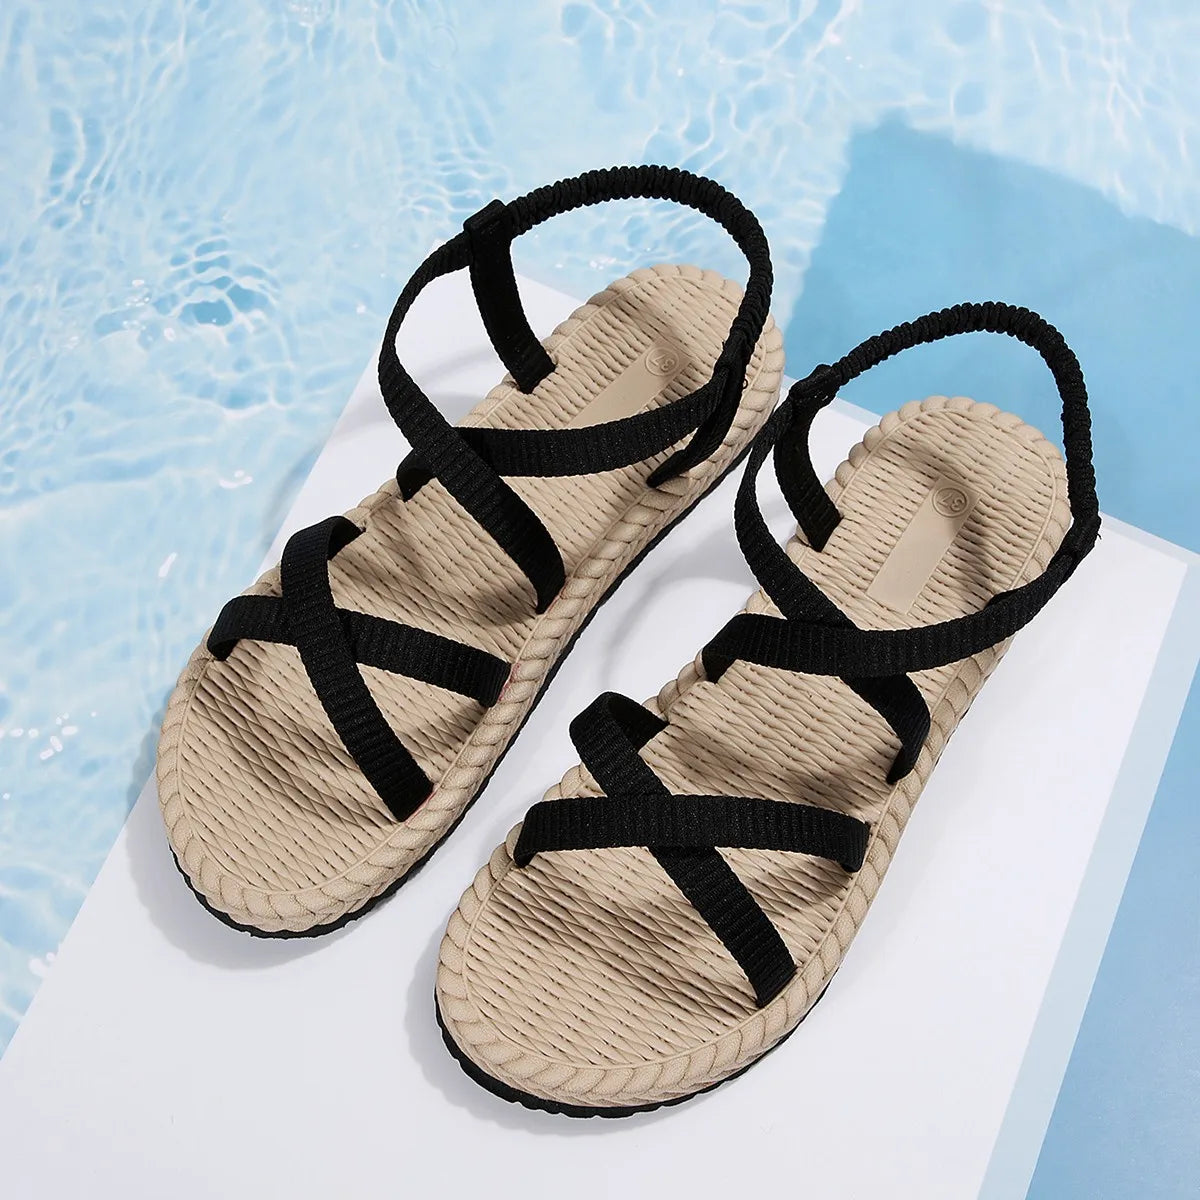 2023 New Summer Rome Sandals Shoes Woman Cross Belt Sandals Flat Beach Sandalias Ladies Sandalia Feminina Open Toe Shoes